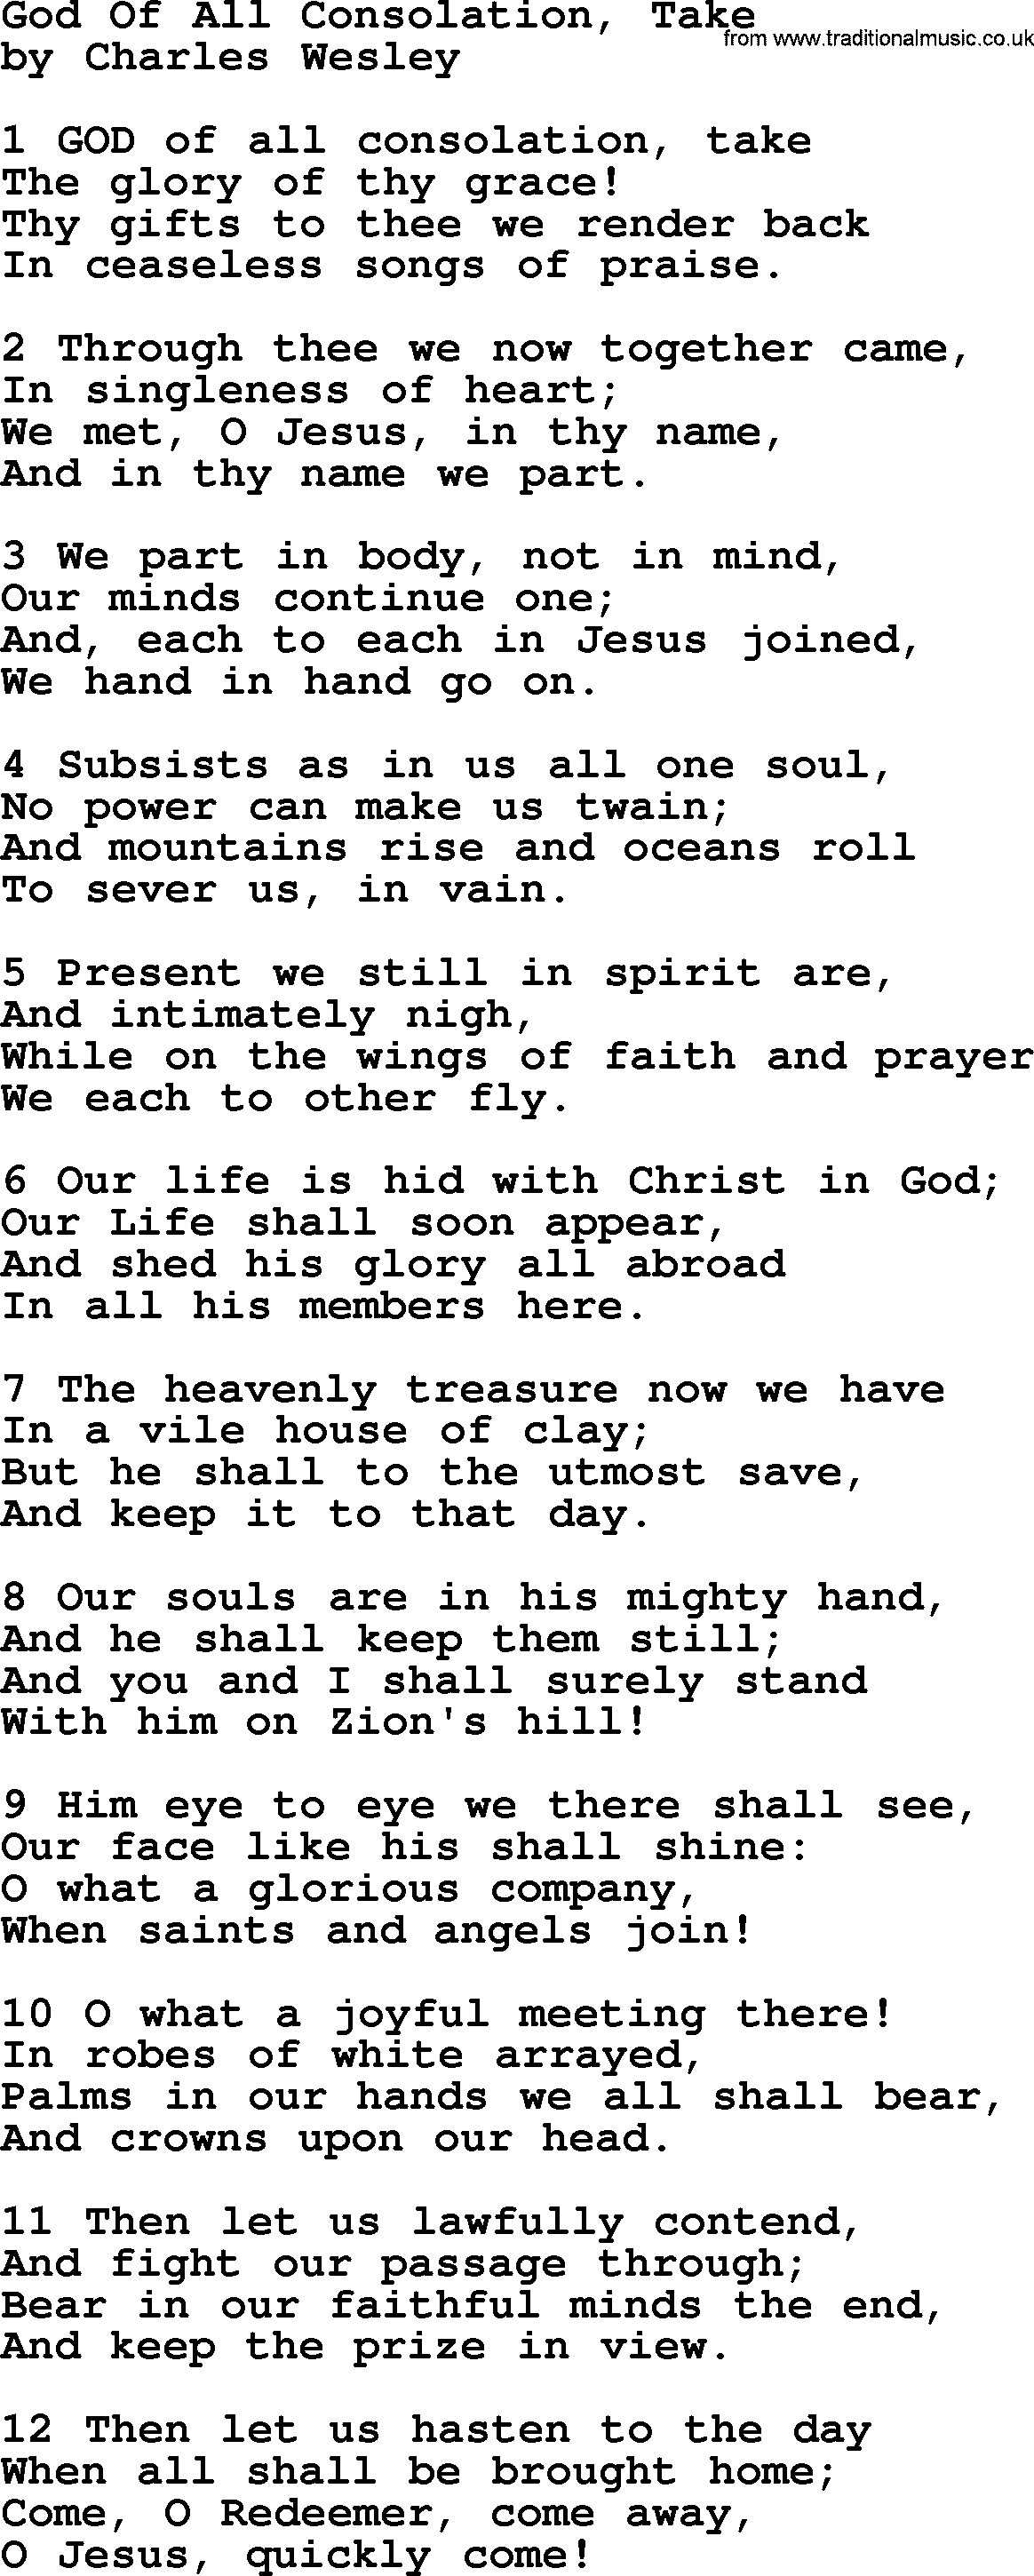 Charles Wesley hymn: God Of All Consolation, Take, lyrics